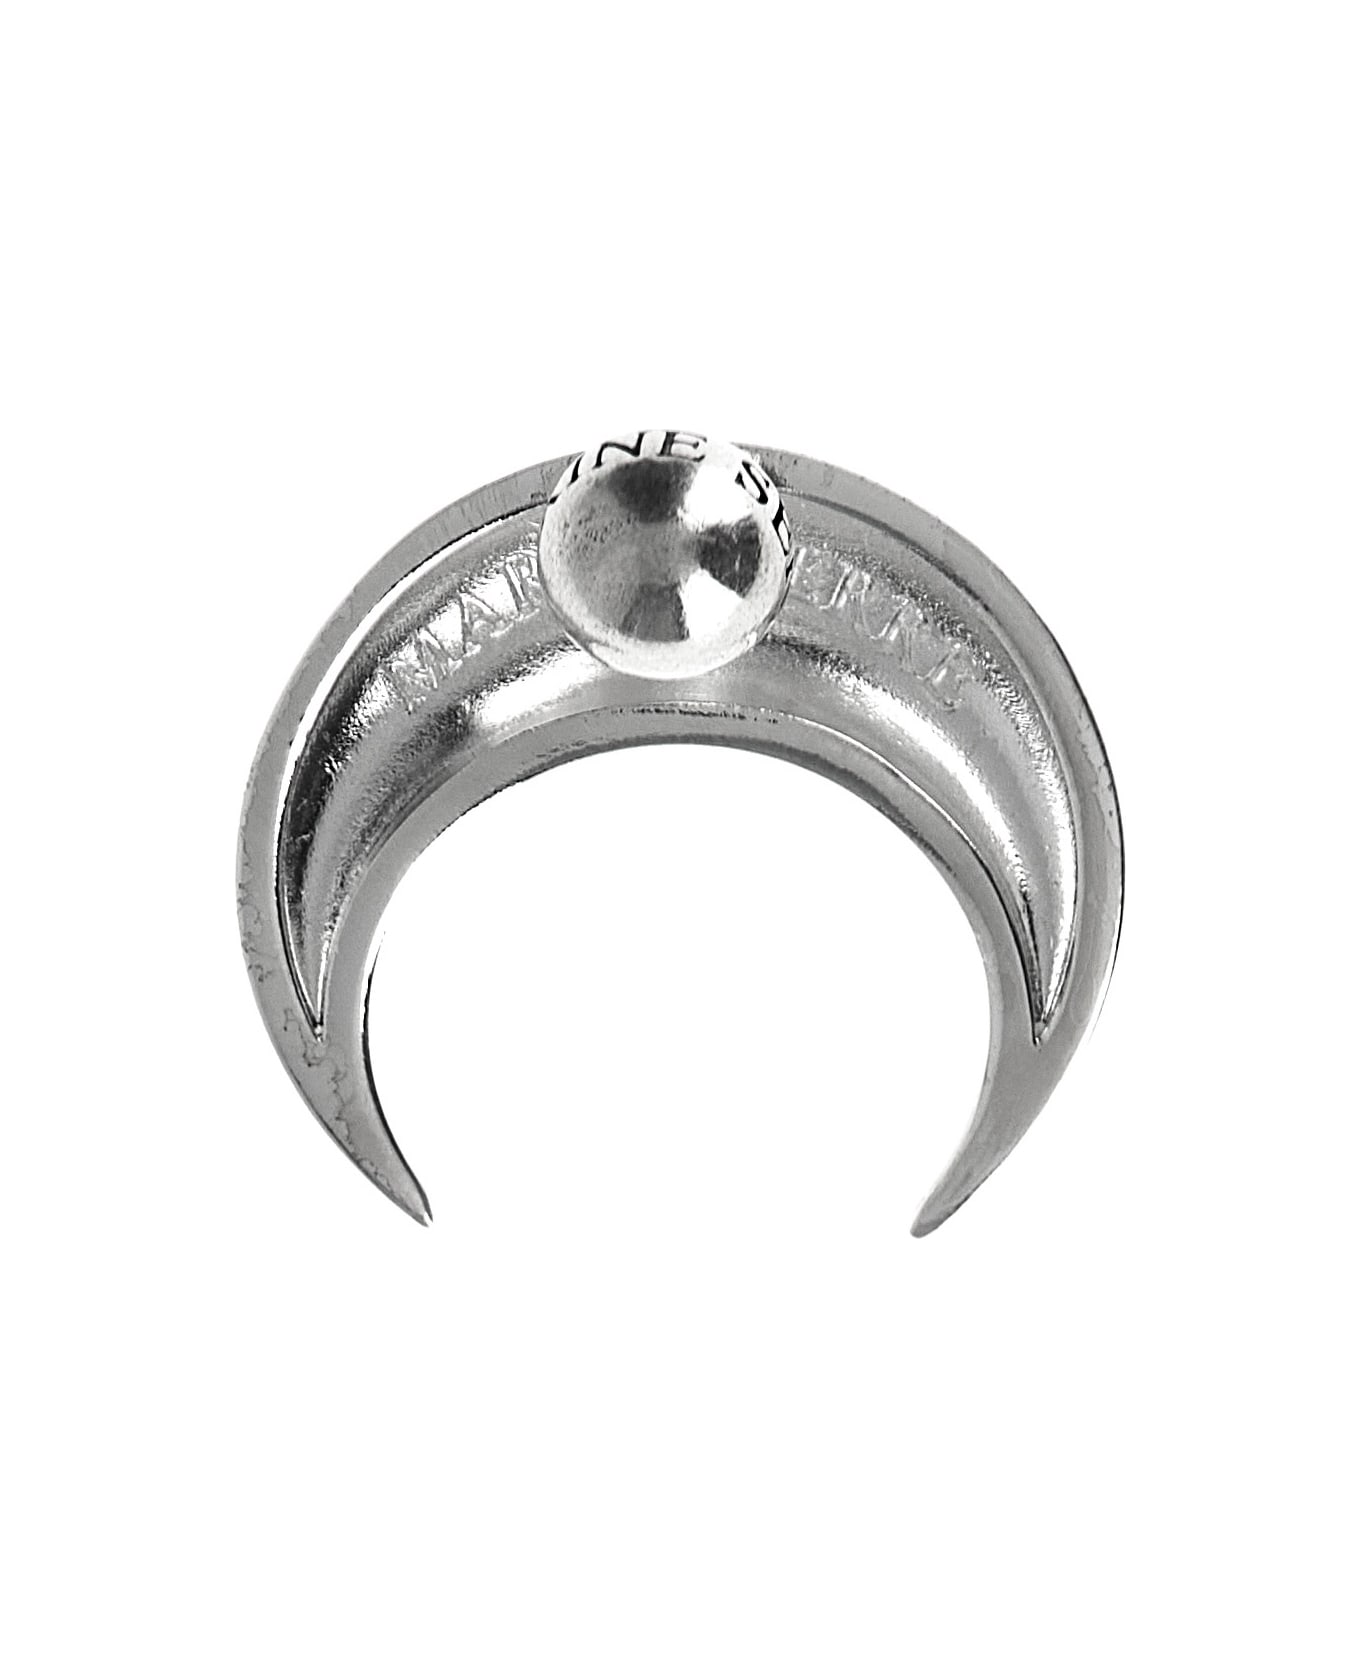 Marine Serre 'moon Stud' Single Earrings - Silver